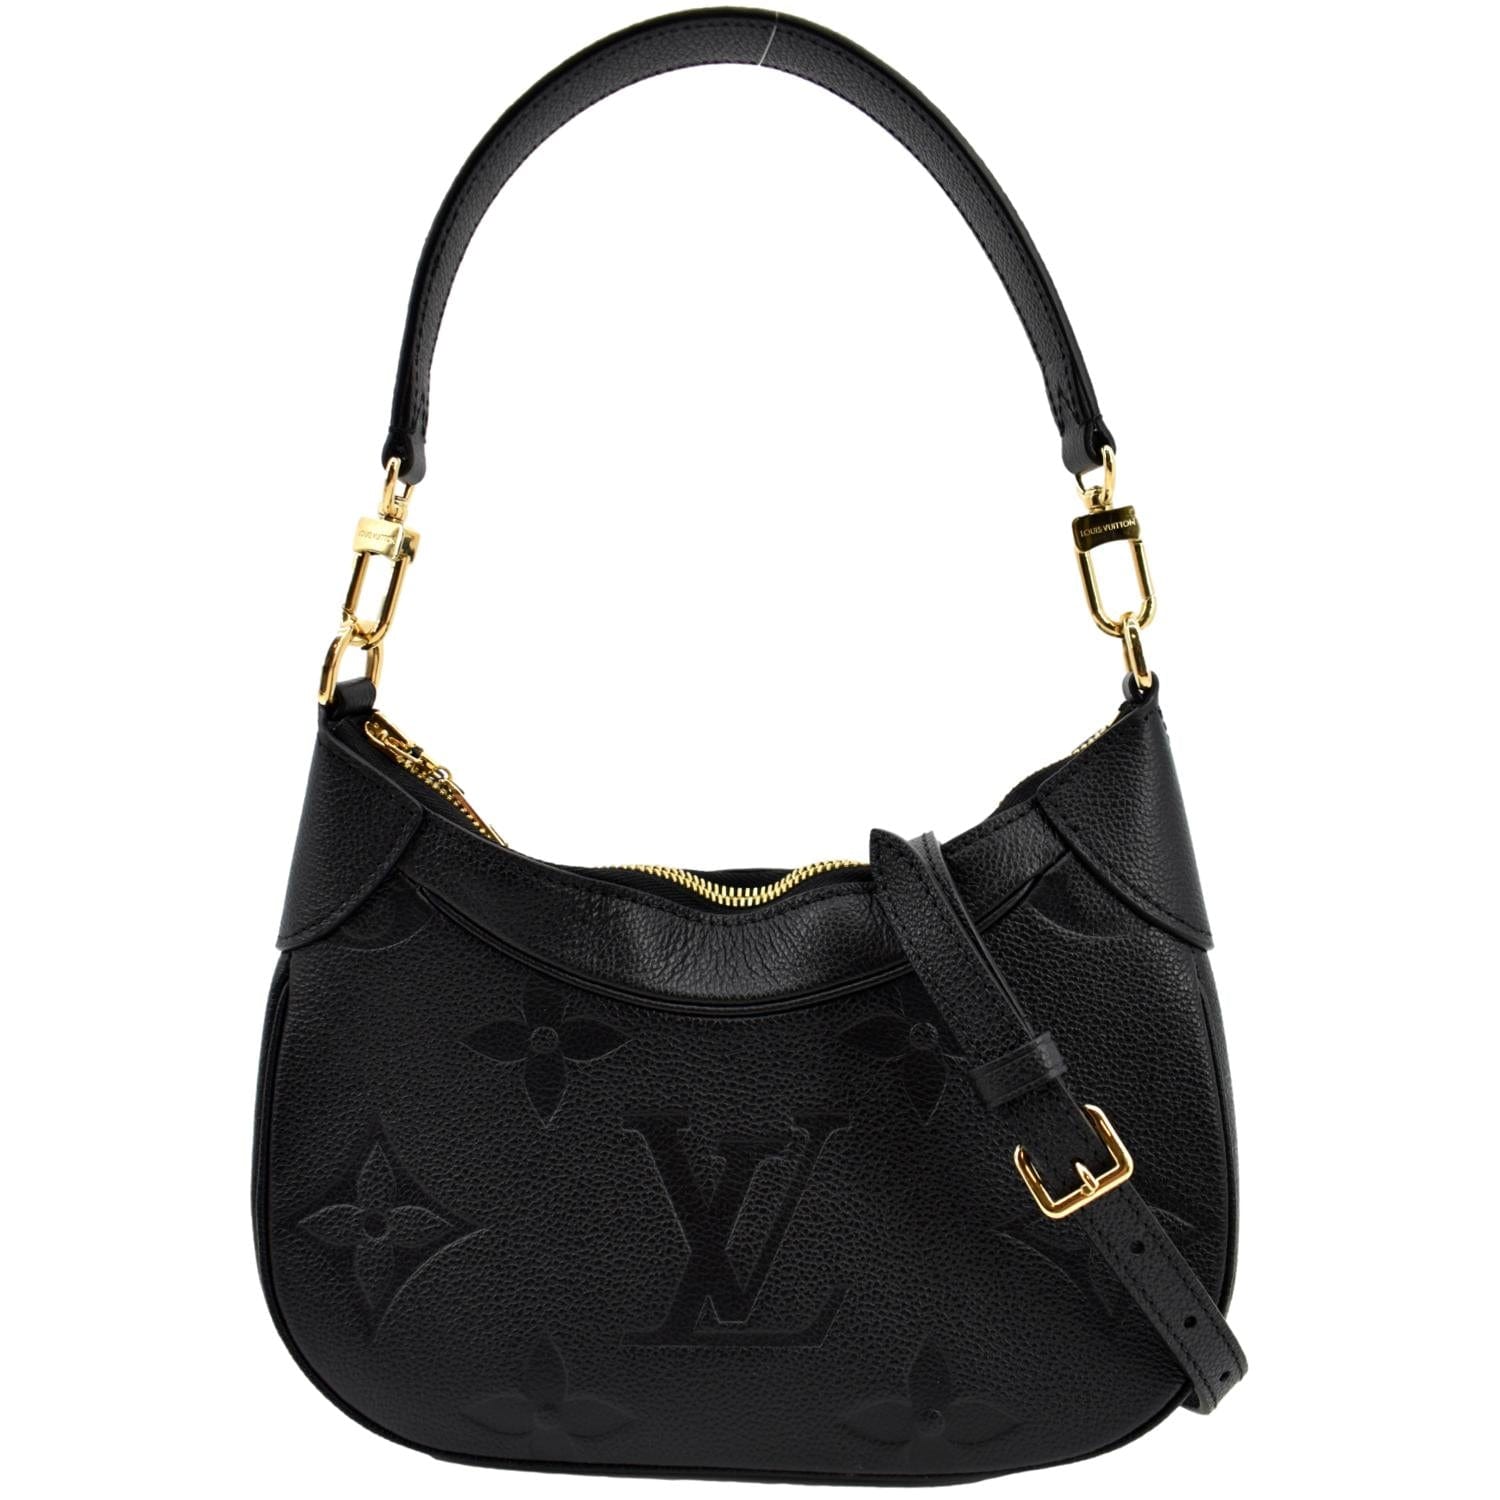 Bagatelle Monogram Empreinte Leather - Women - Handbags